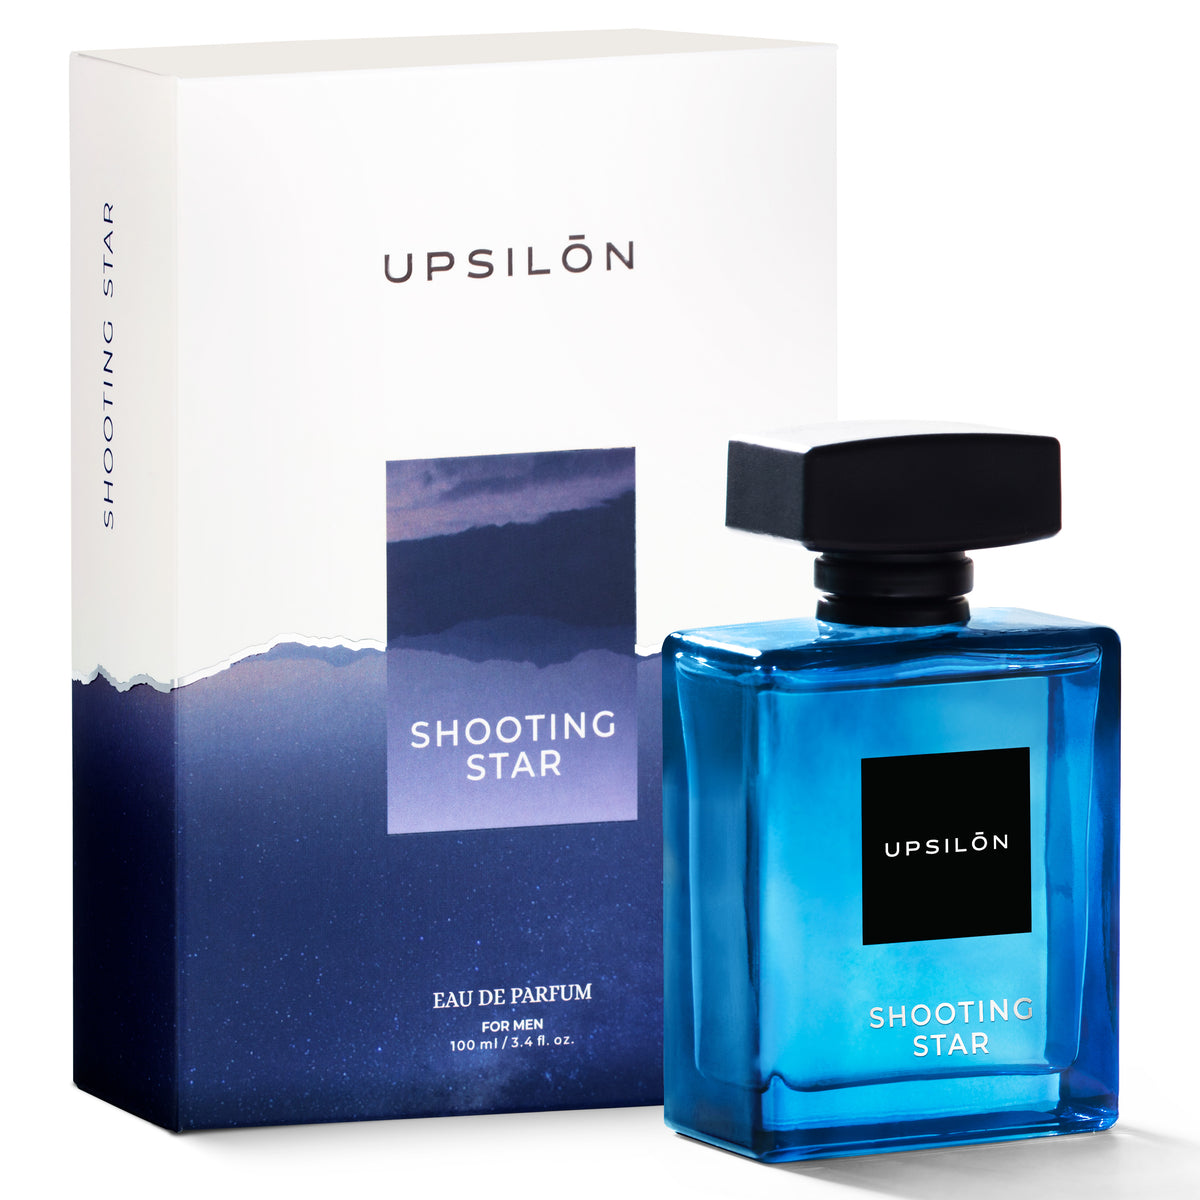 Upsilon Shooting Star Eau de Parfum for Men, 100ml. A premium, long-lasting, fresh, and powerful fragrance spray. Travel-friendly luxury parfum scent